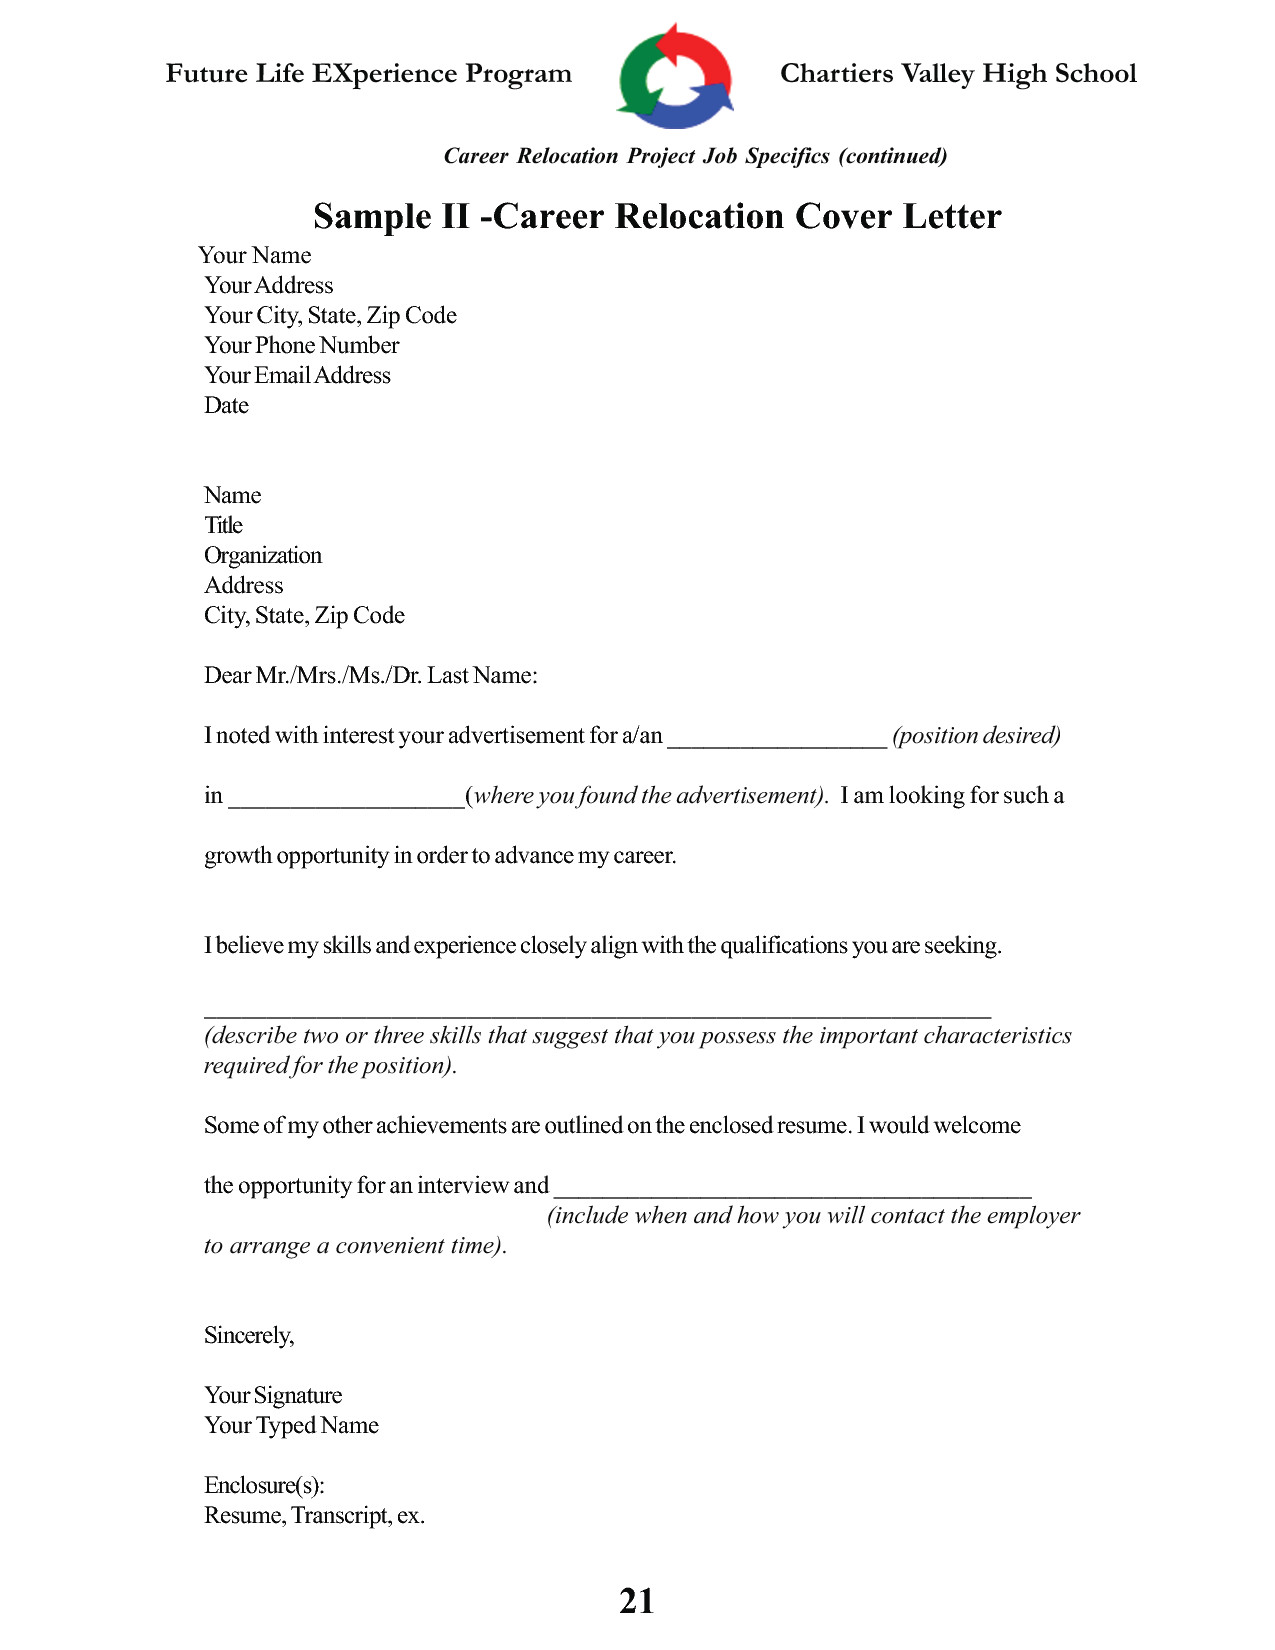 cover letter for job relocation sample